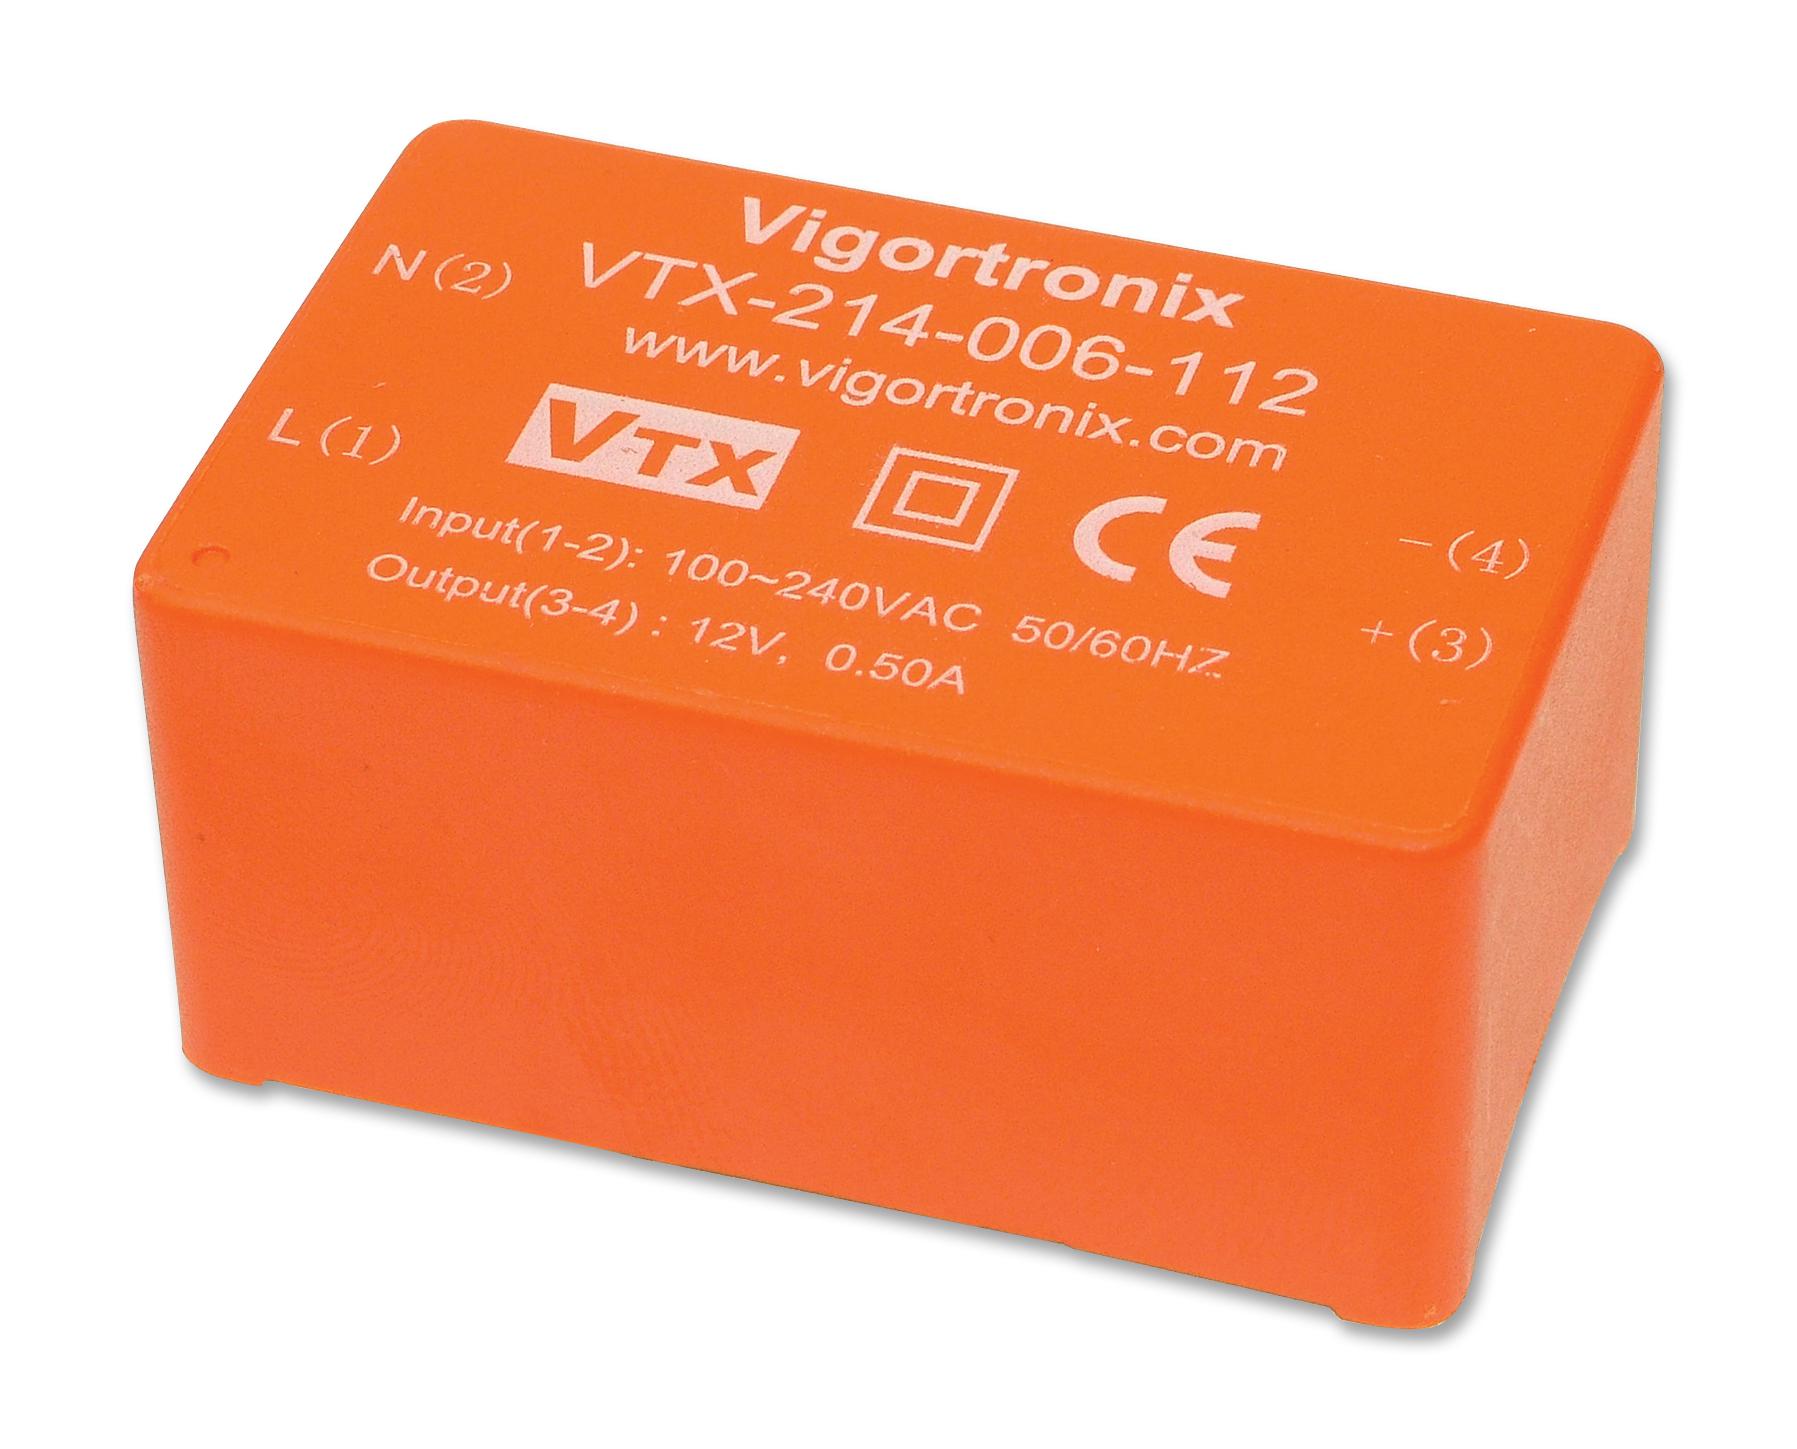 VTX-214-006-107 POWER SUPPLY, AC-DC, 7.5V, 0.8A VIGORTRONIX